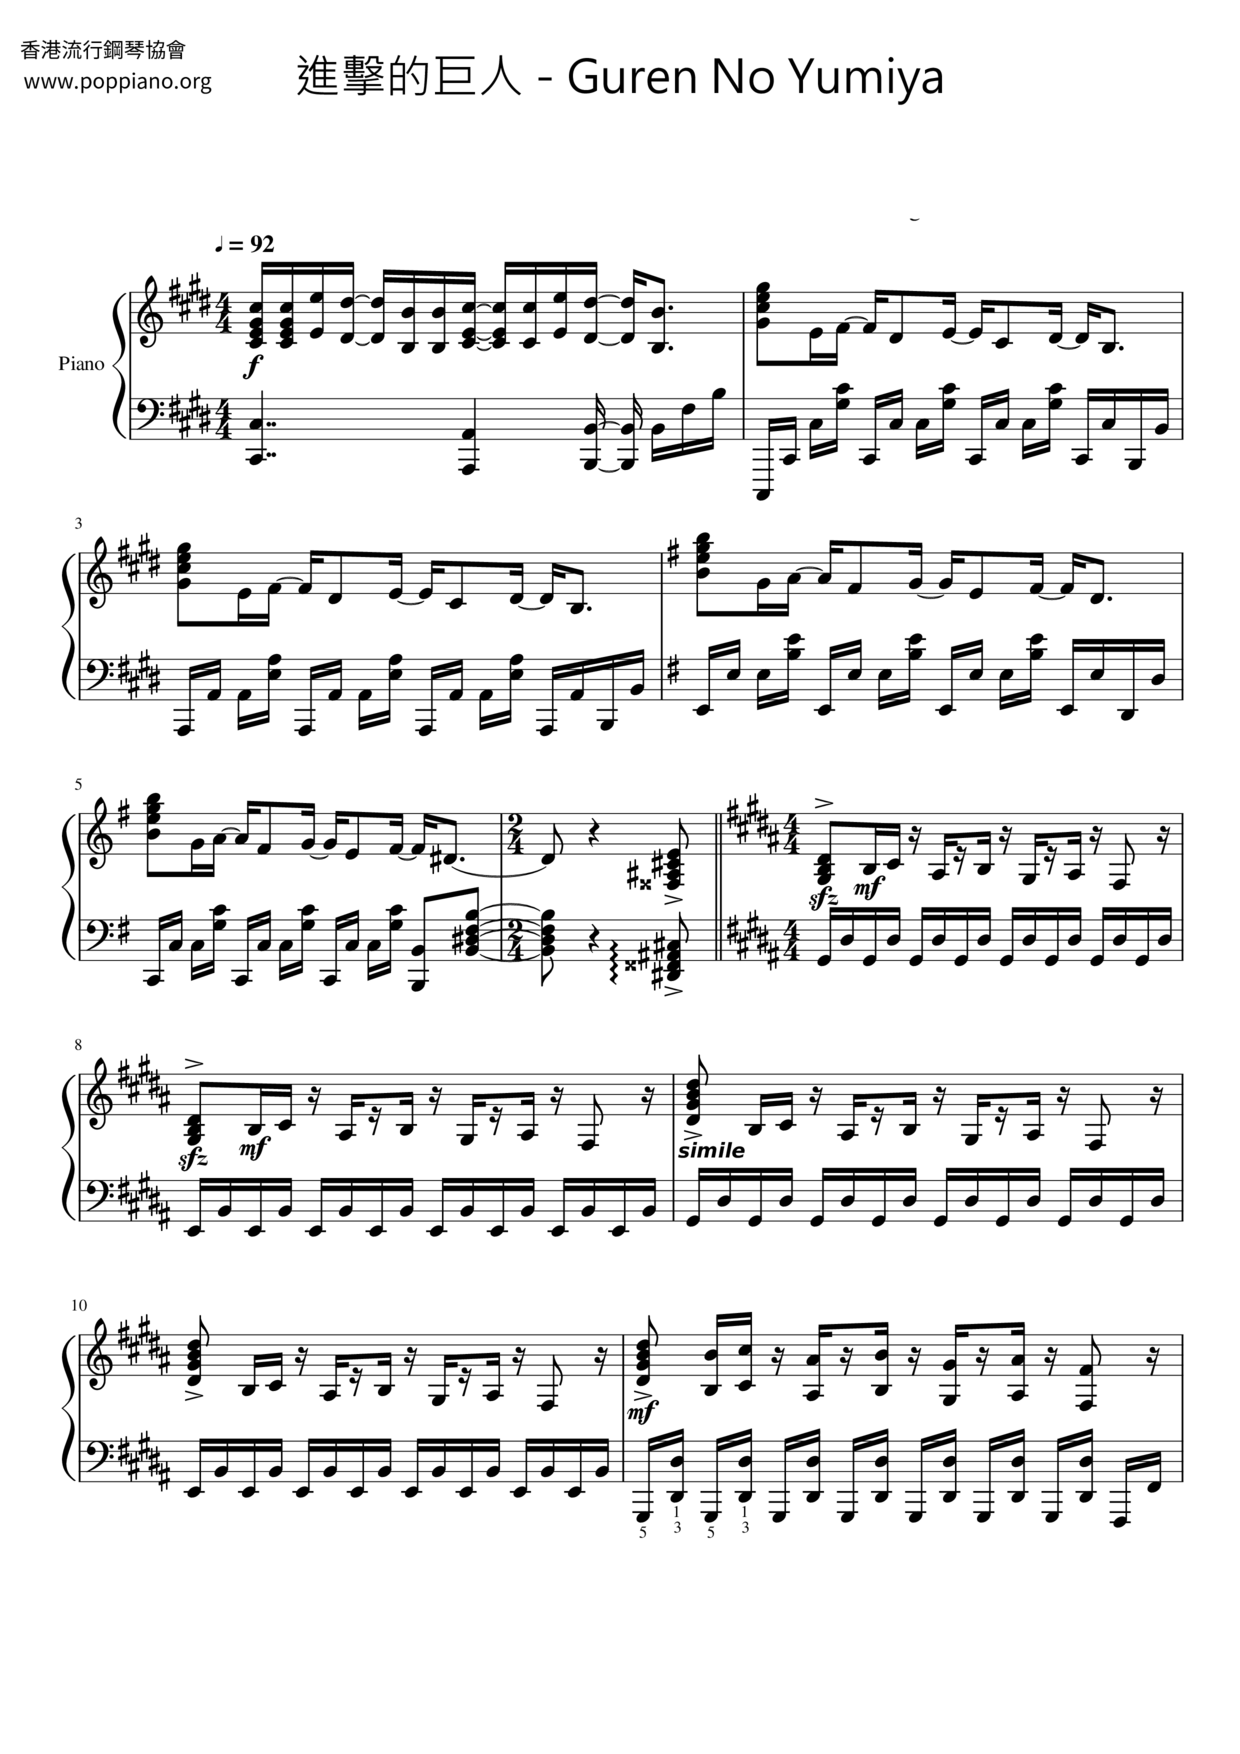 Attack On Titan Theme (Guren No Yumiya) Sheet music for Piano